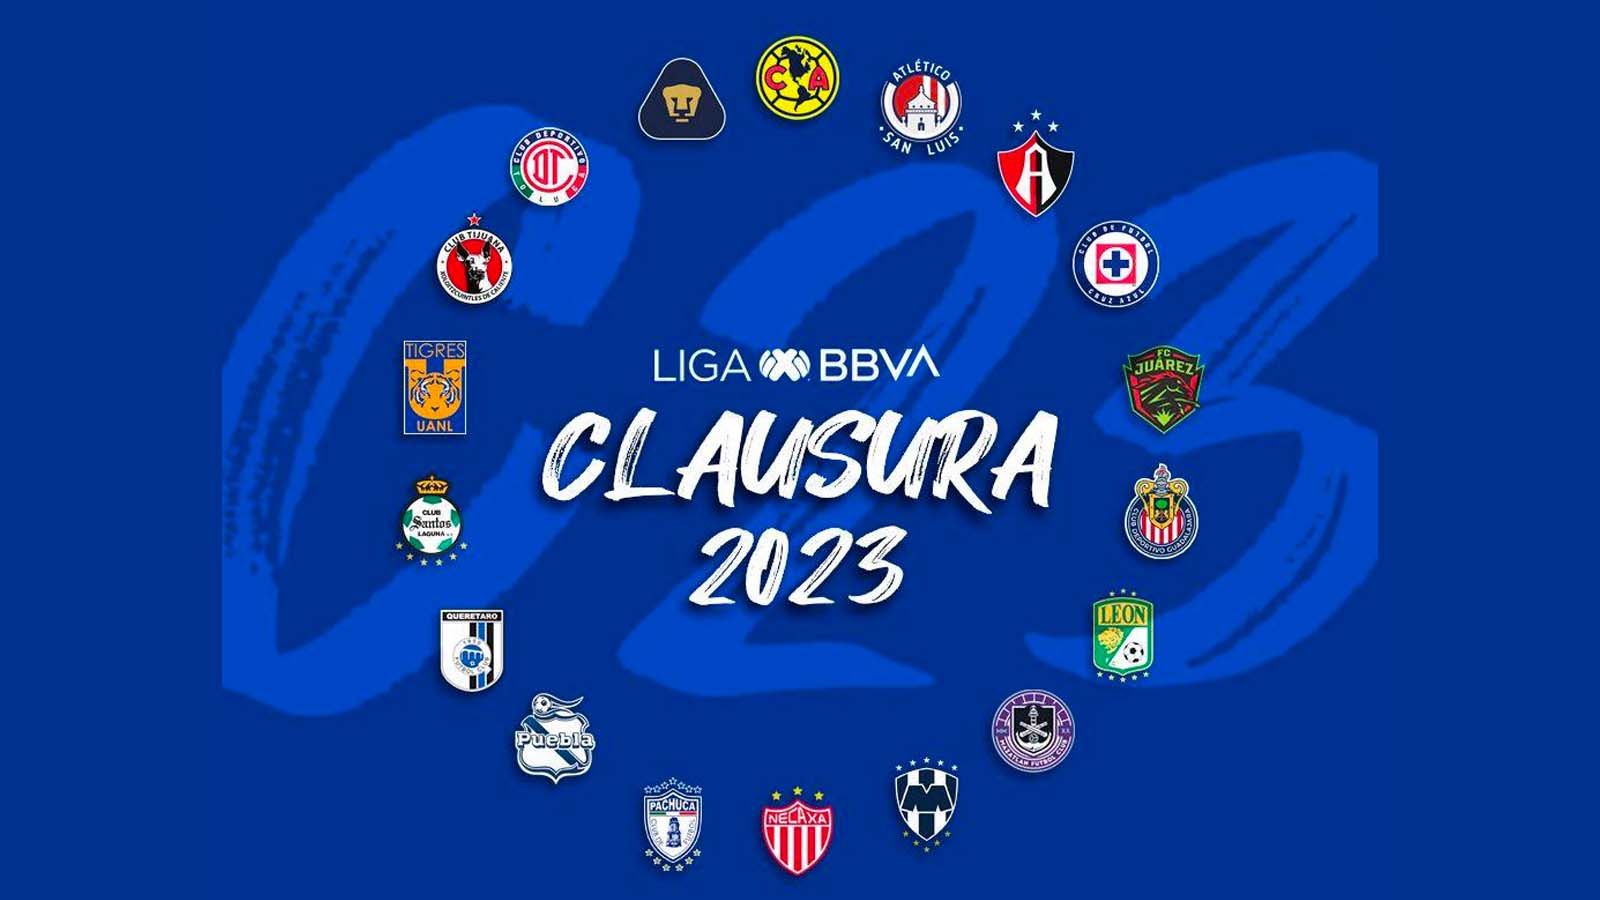  Liga MX